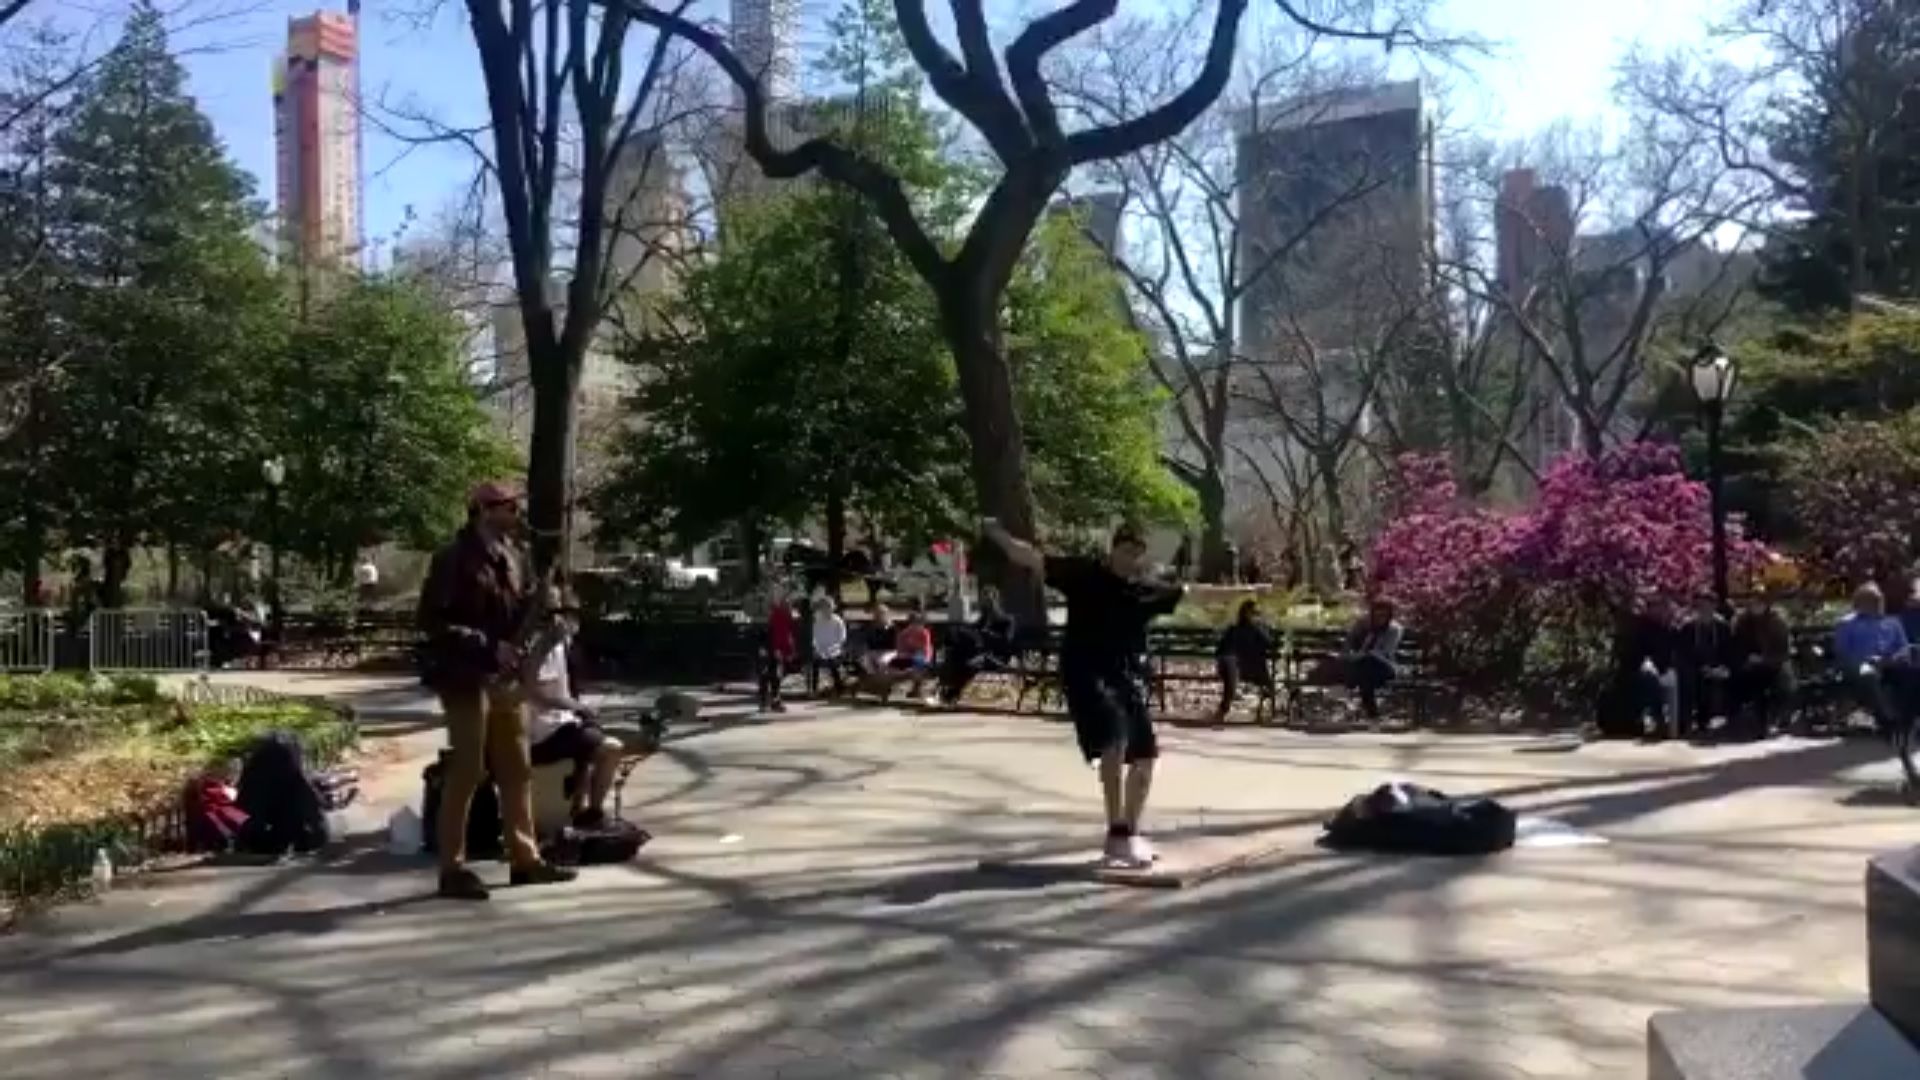 Joven baila en corredores del Central Park, en Nueva York (Twitter @baileemurphee)